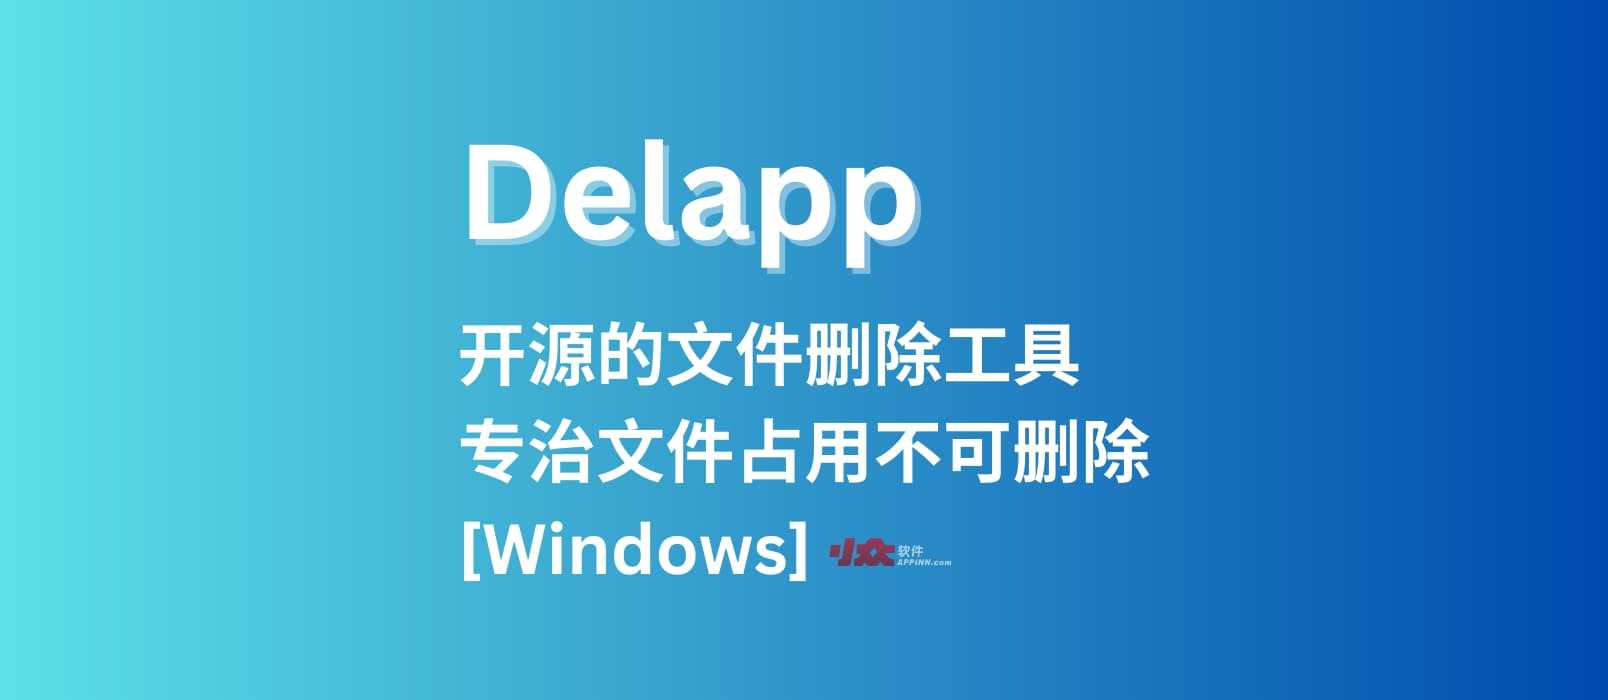 Delapp - 开源的文件删除工具，专治文件占用不可删除[Windows]开发者「瞎扯八道」写的好